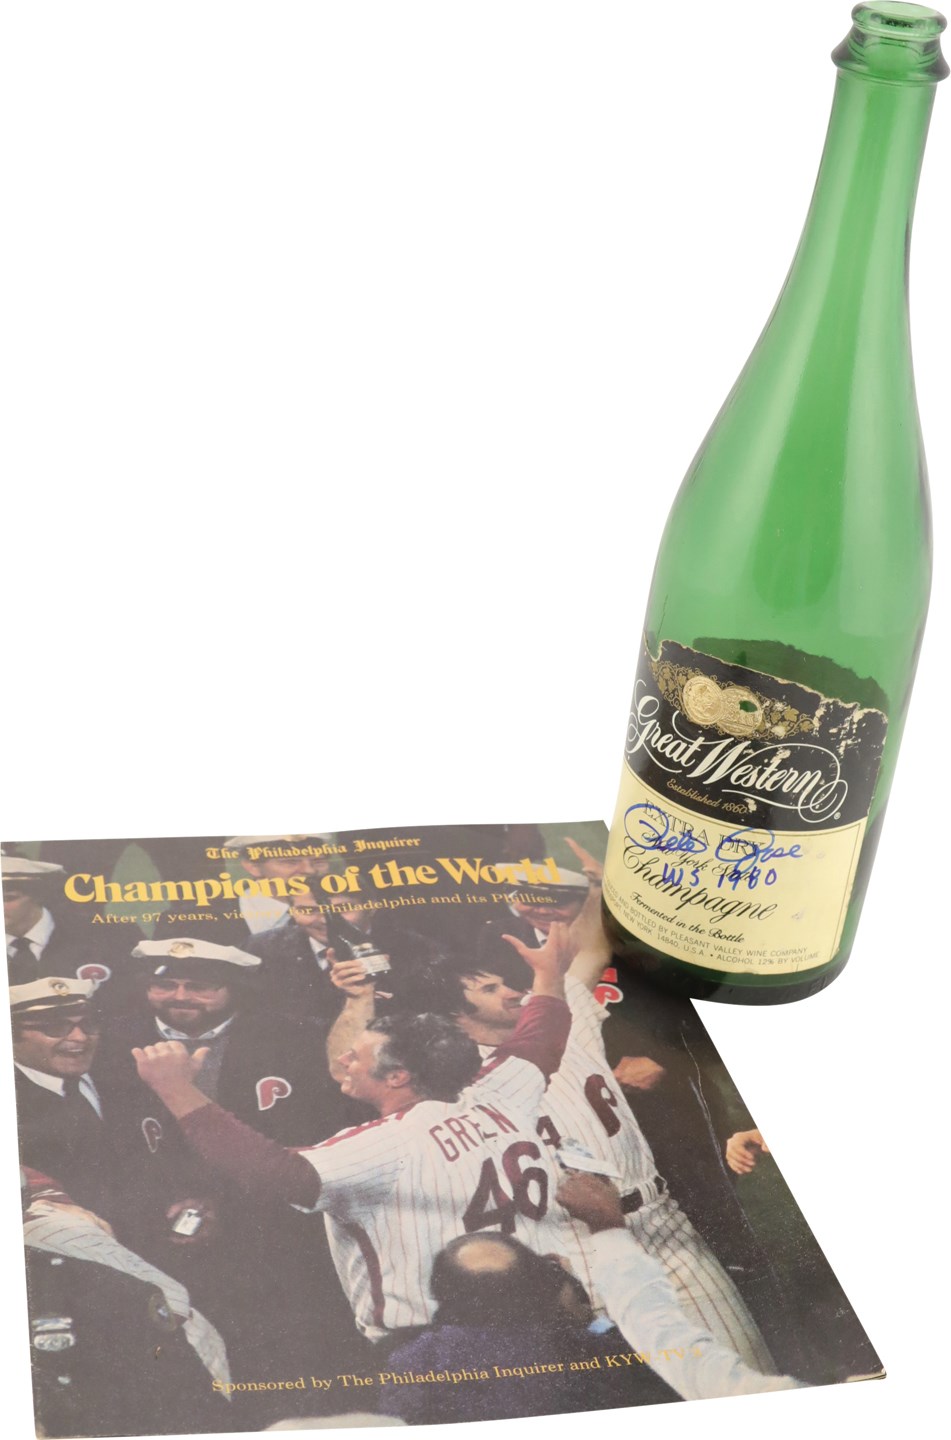 Baseball Autographs - 1980 Philadelphia Phillies World Series Championship Celebratory Champagne Bottle Signed by Pete Rose